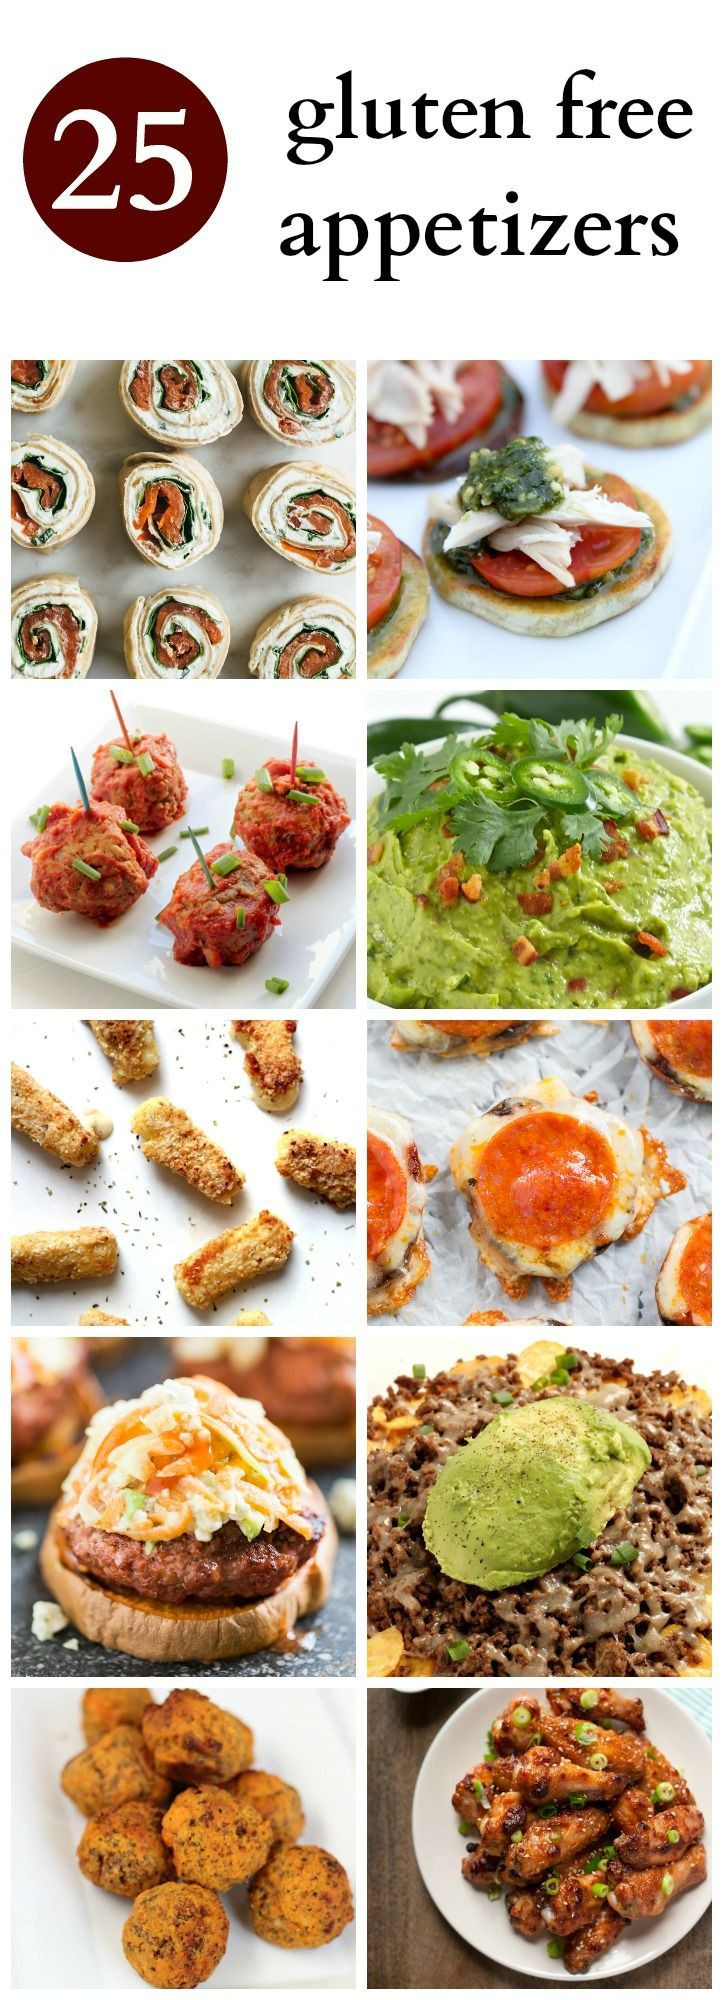 Gluten Free Dinner Party Recipes
 25 best ideas about Gluten Free Appetizers on Pinterest